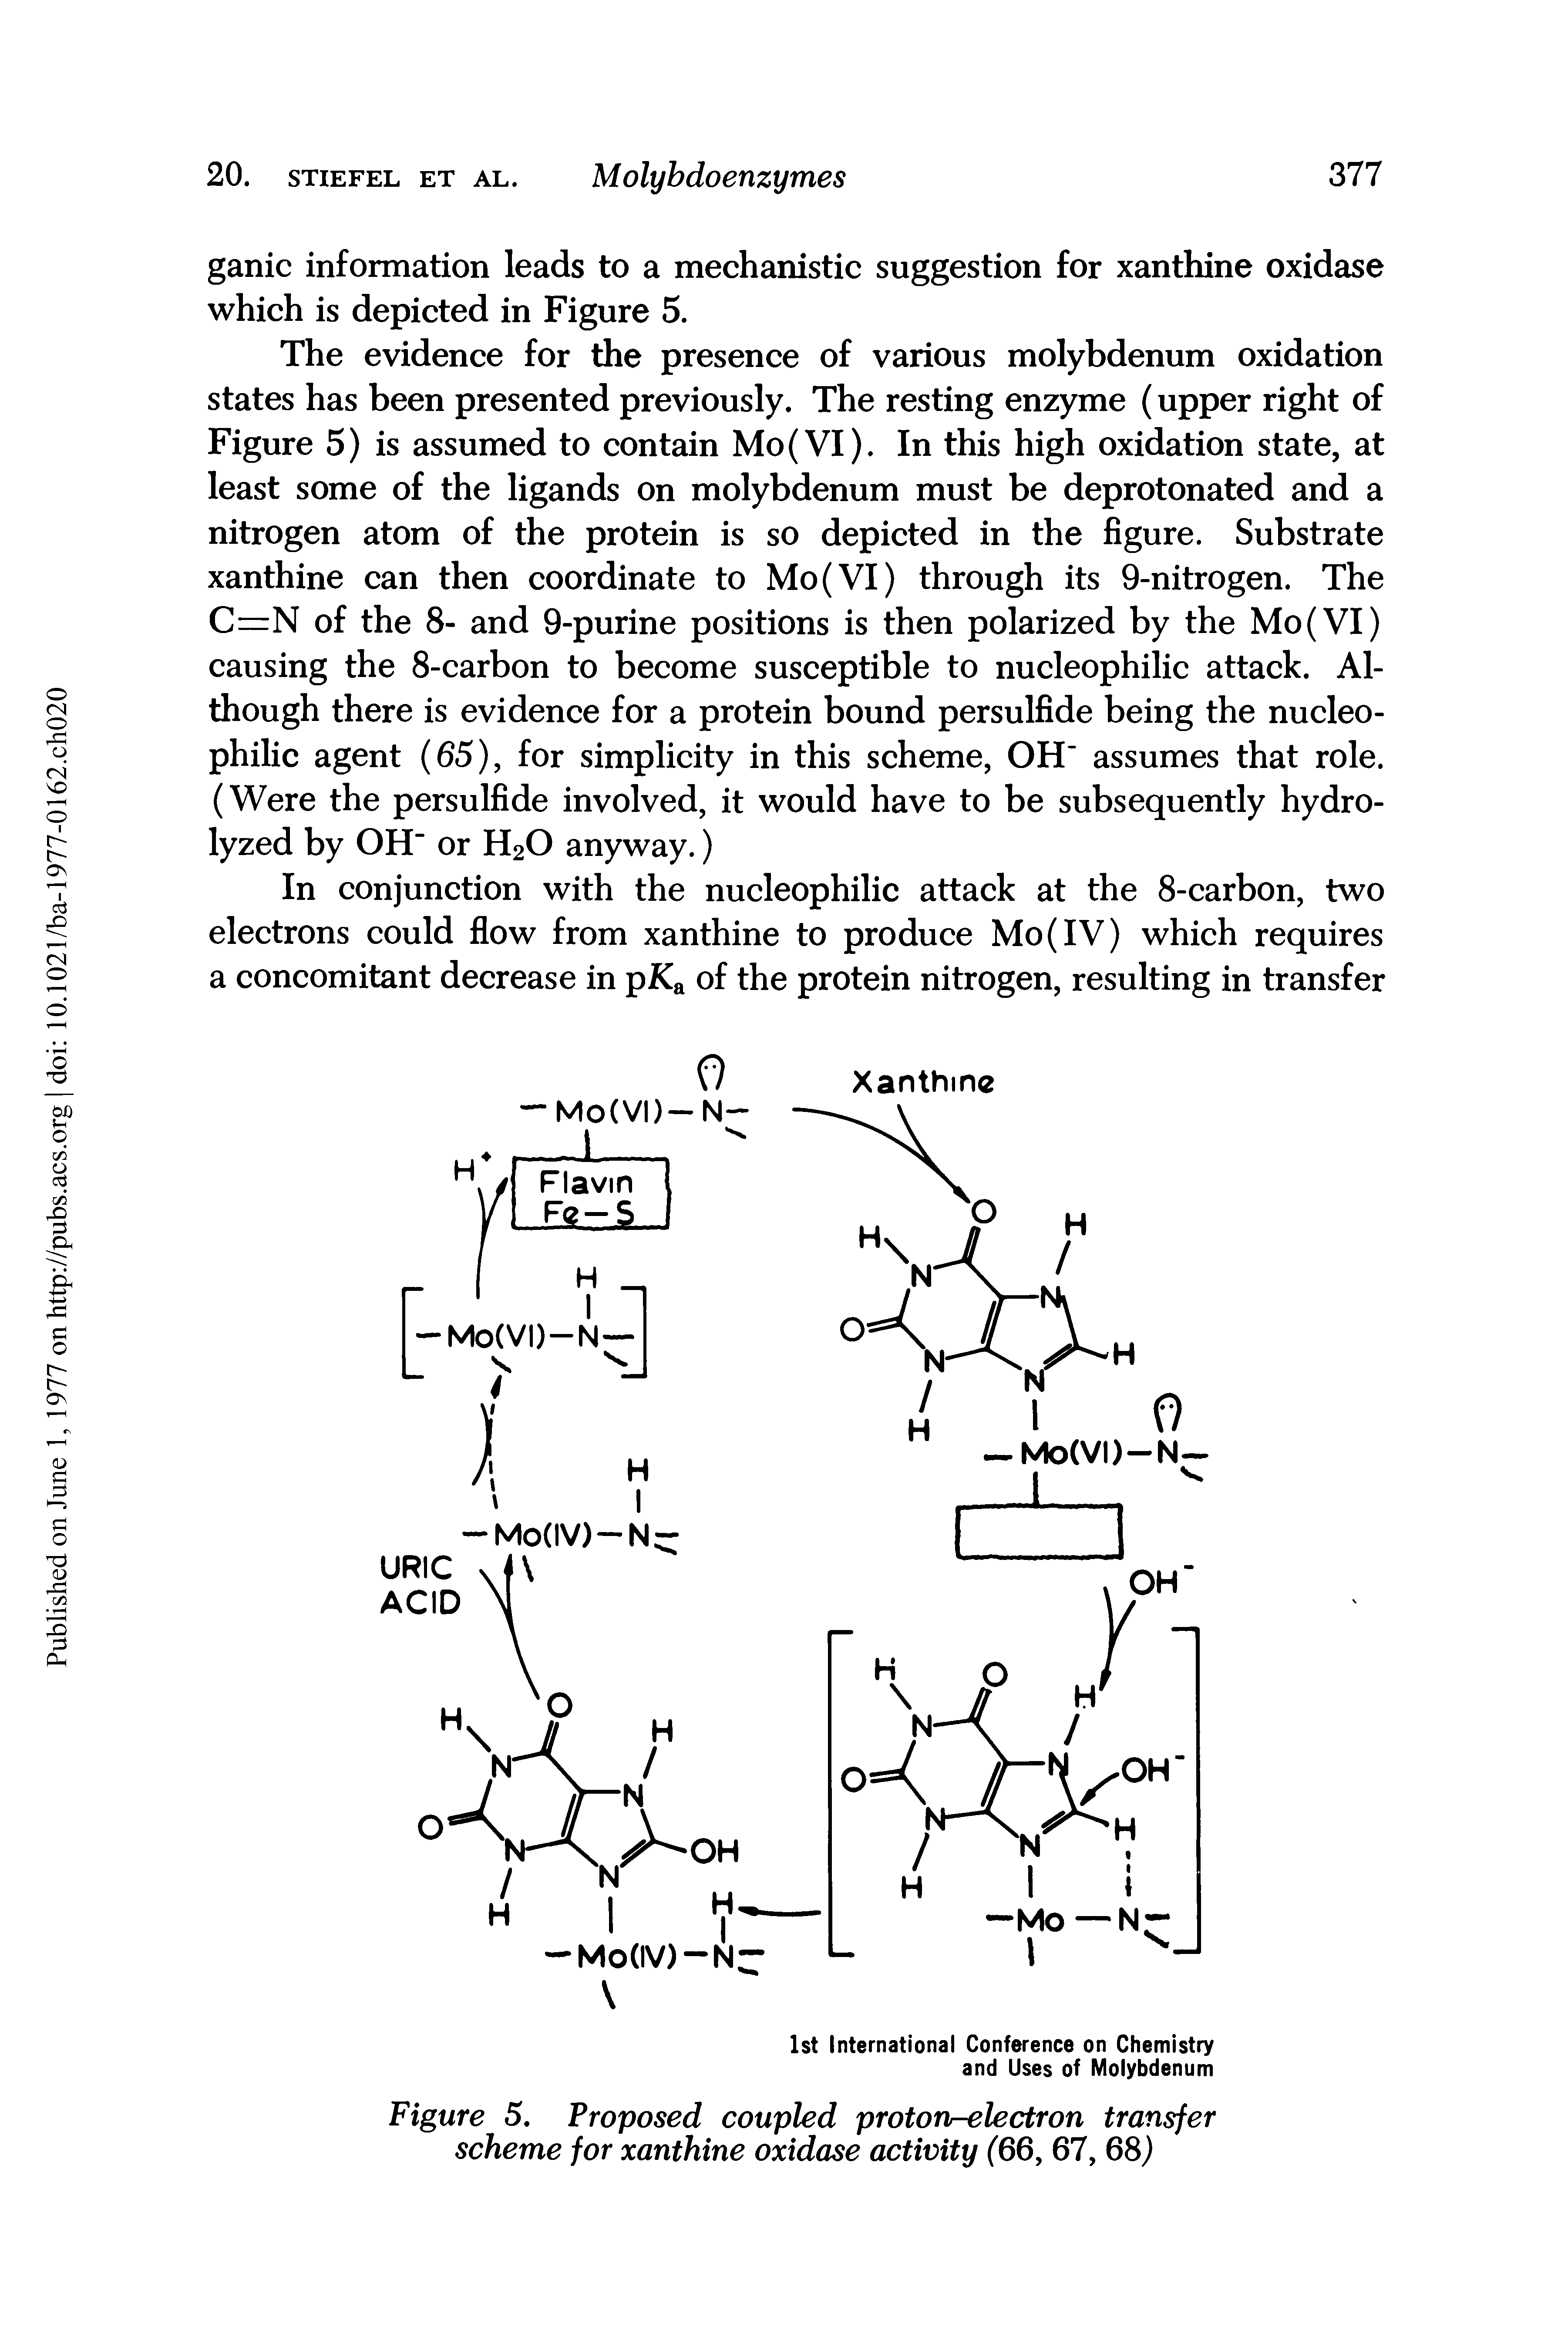 Figure 5. Proposed coupled proton-electron transfer scheme for xanthine oxidase activity (66, 67, 68)...